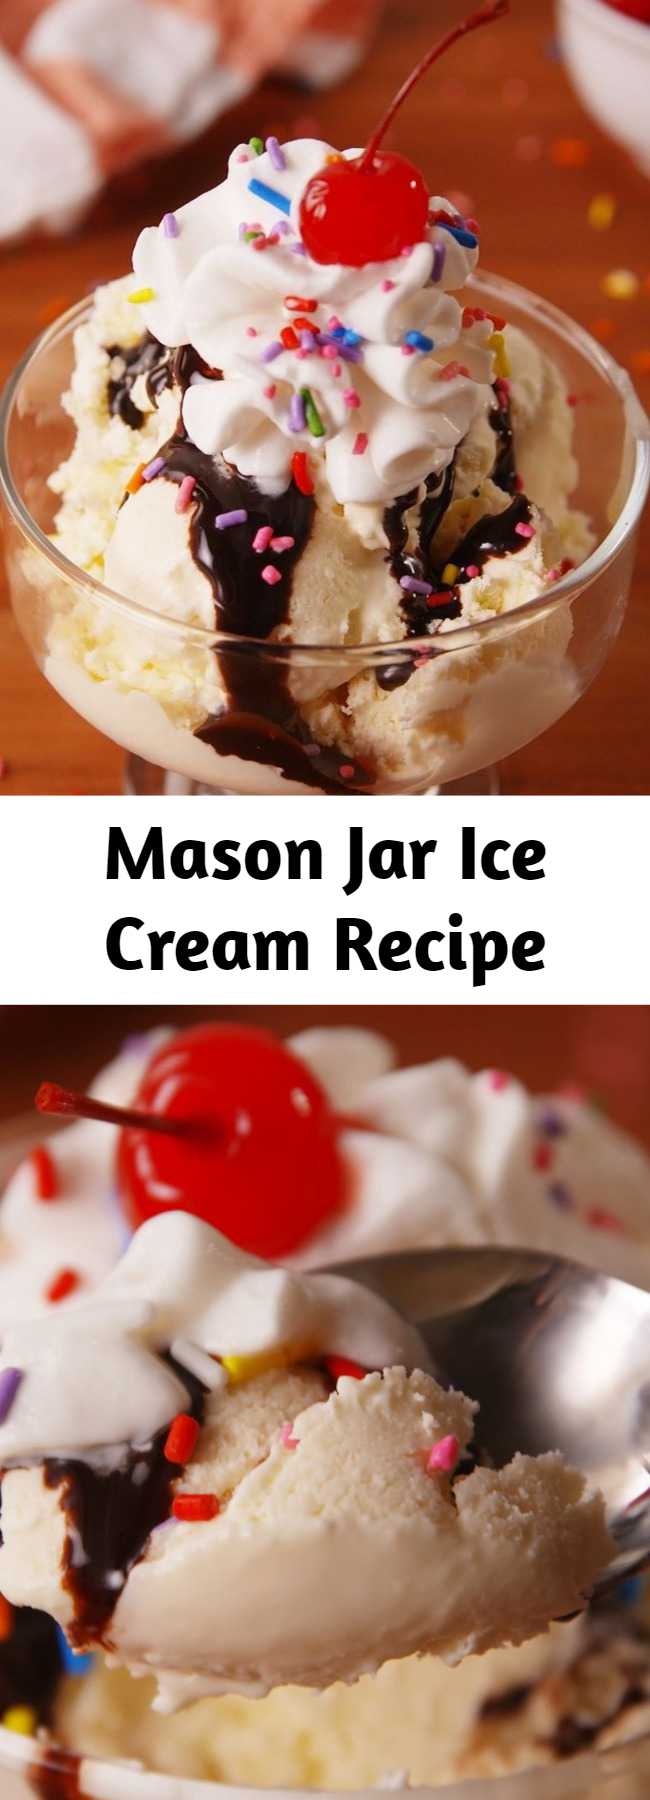 Mason Jar Ice Cream Recipe - Easy to make homemade ice cream with just 4 ingredients. No need to scream for ice cream!